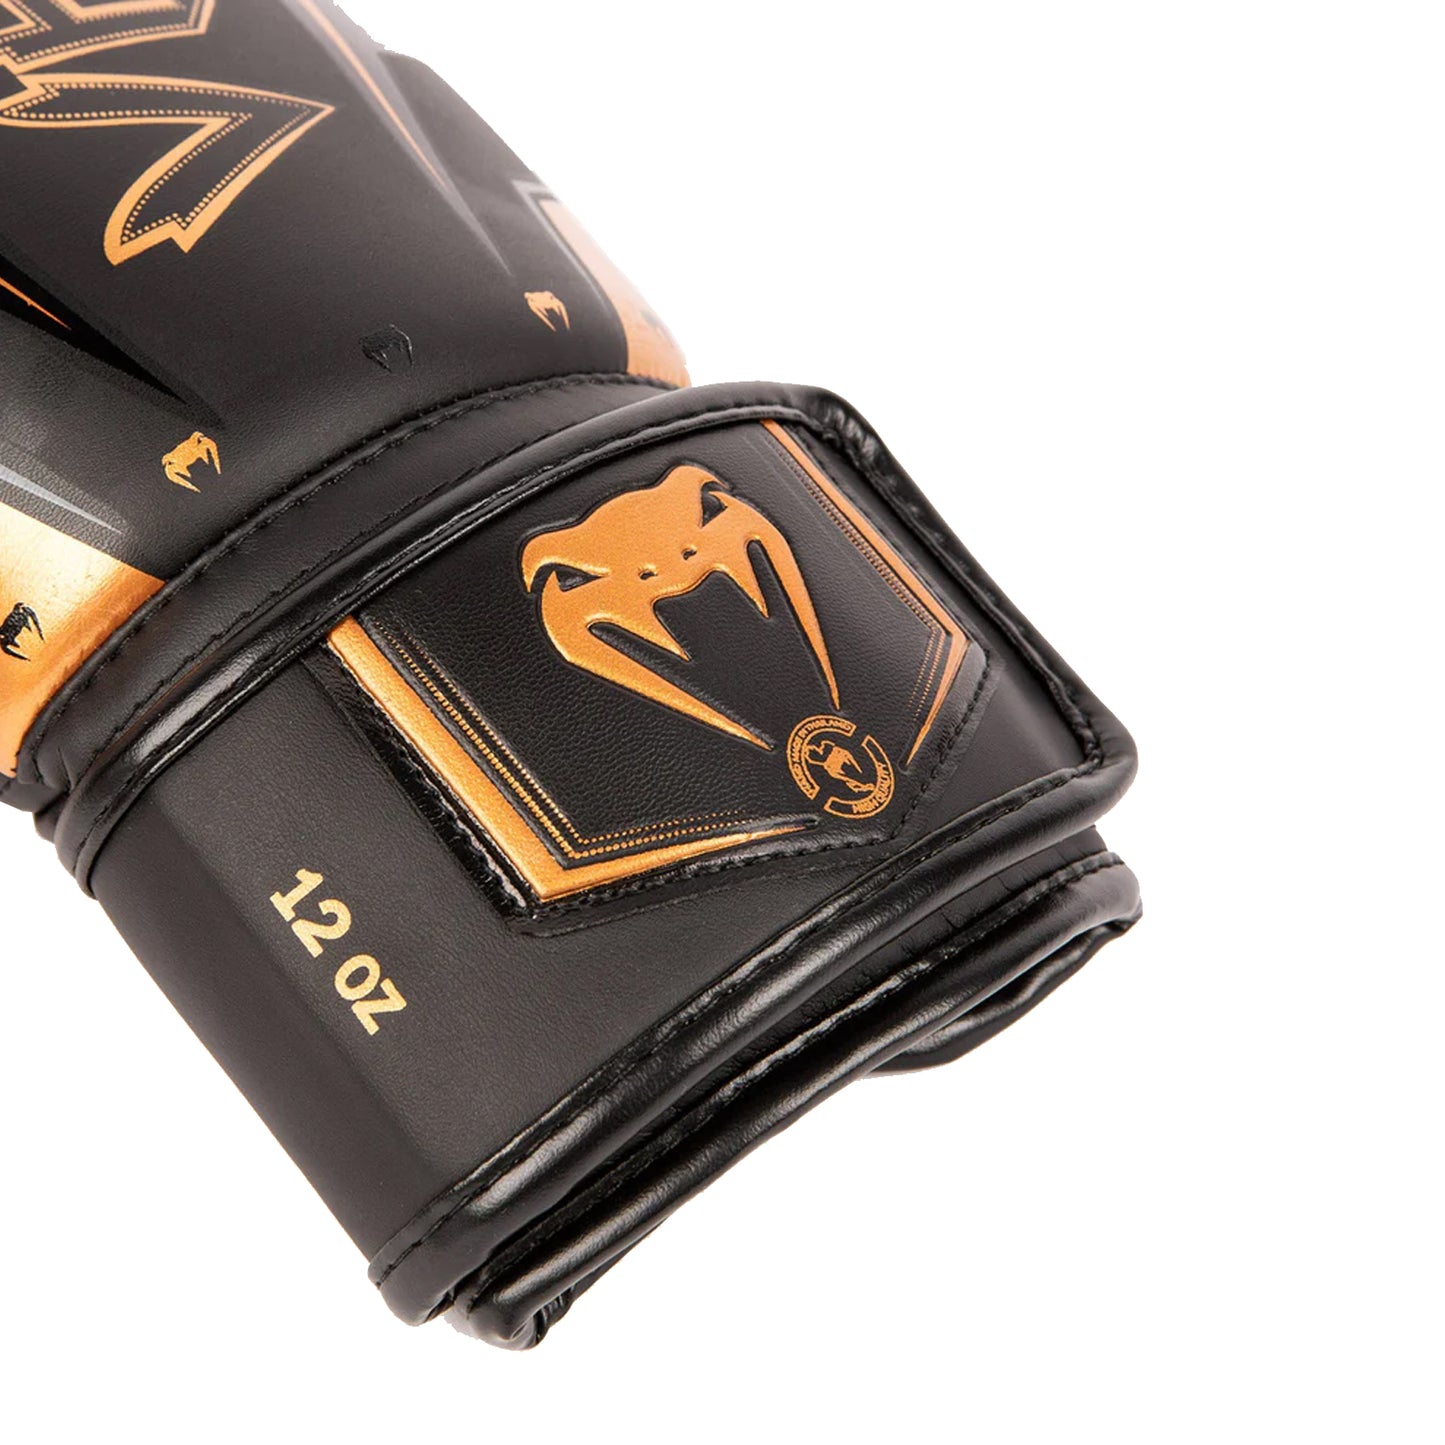 Venum Elite 2.0 Boxing Gloves - Best Price online Prokicksports.com